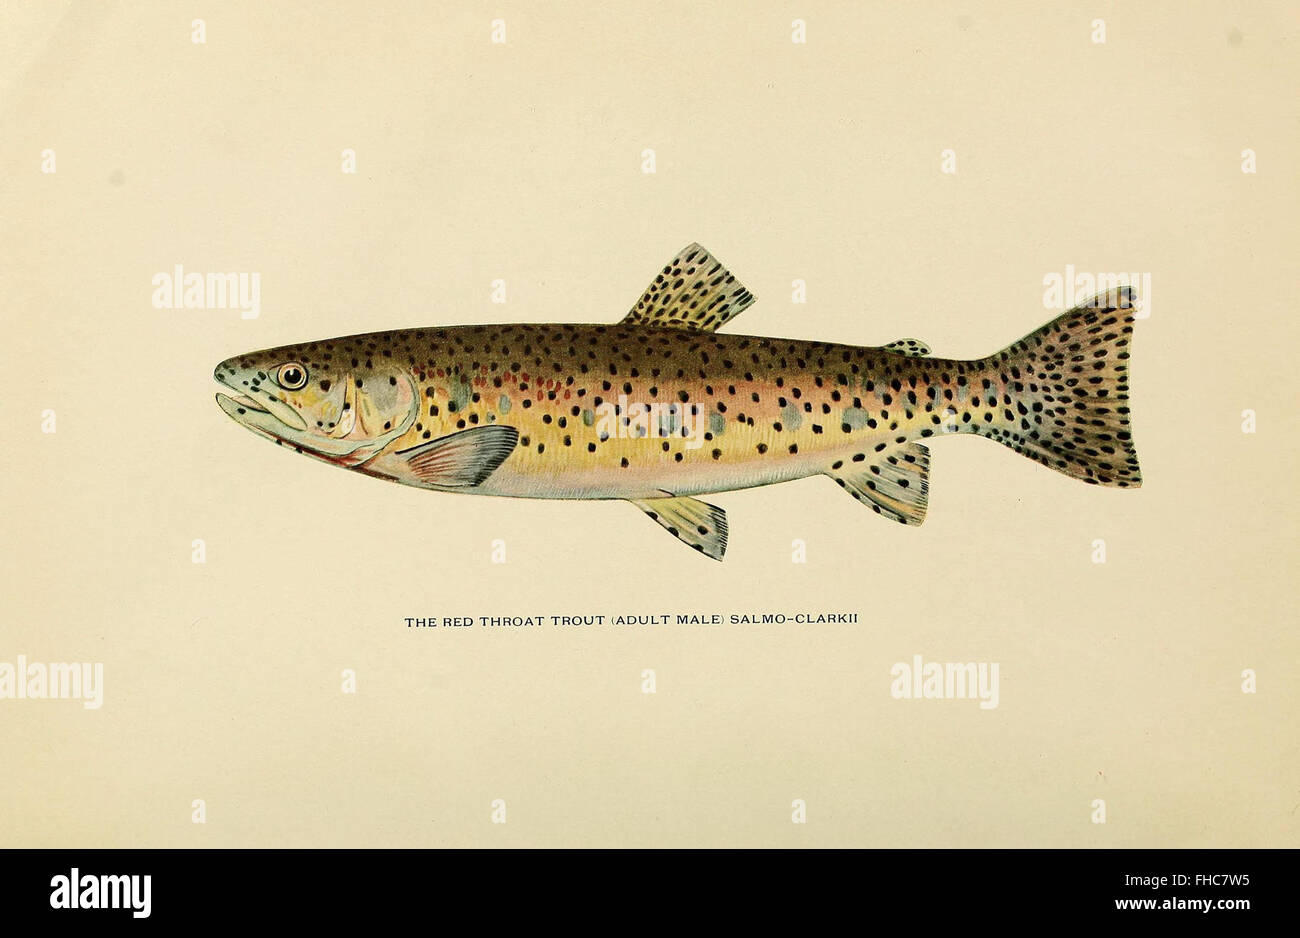 https://c8.alamy.com/comp/FHC7W5/trout-fly-fishing-in-america-FHC7W5.jpg